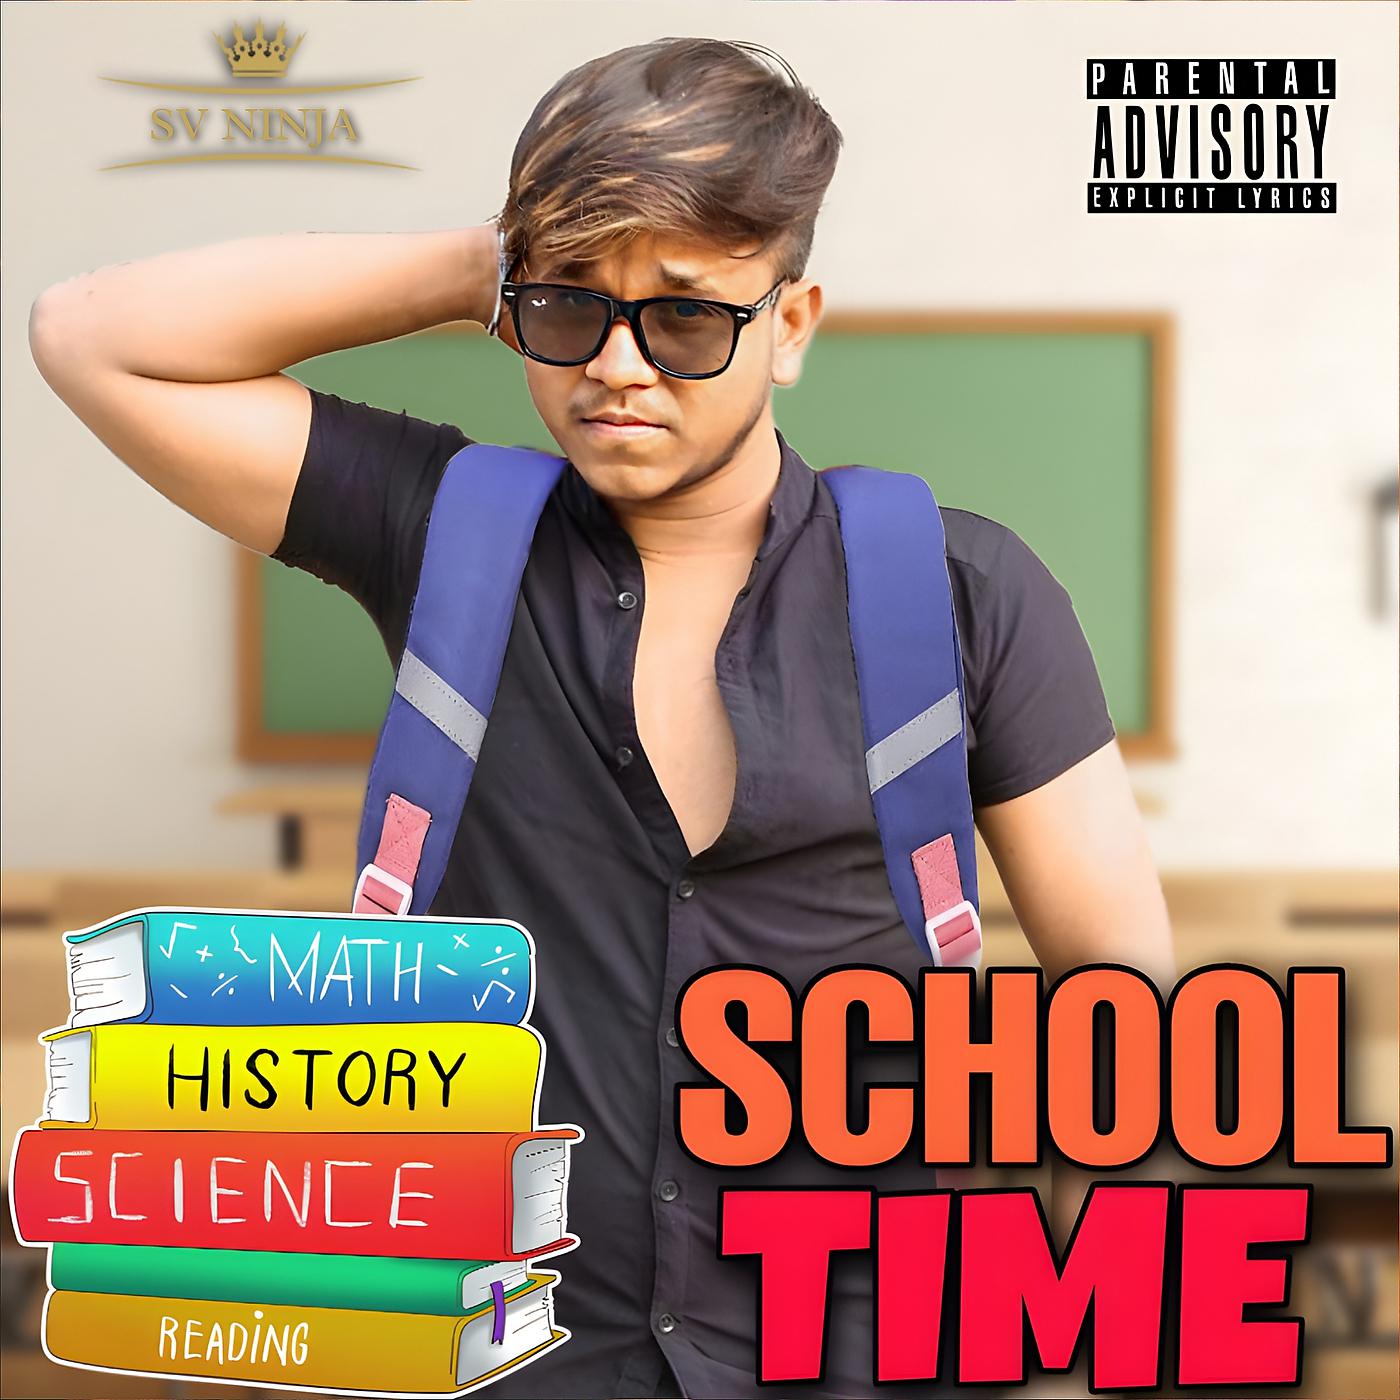 Постер альбома School Time